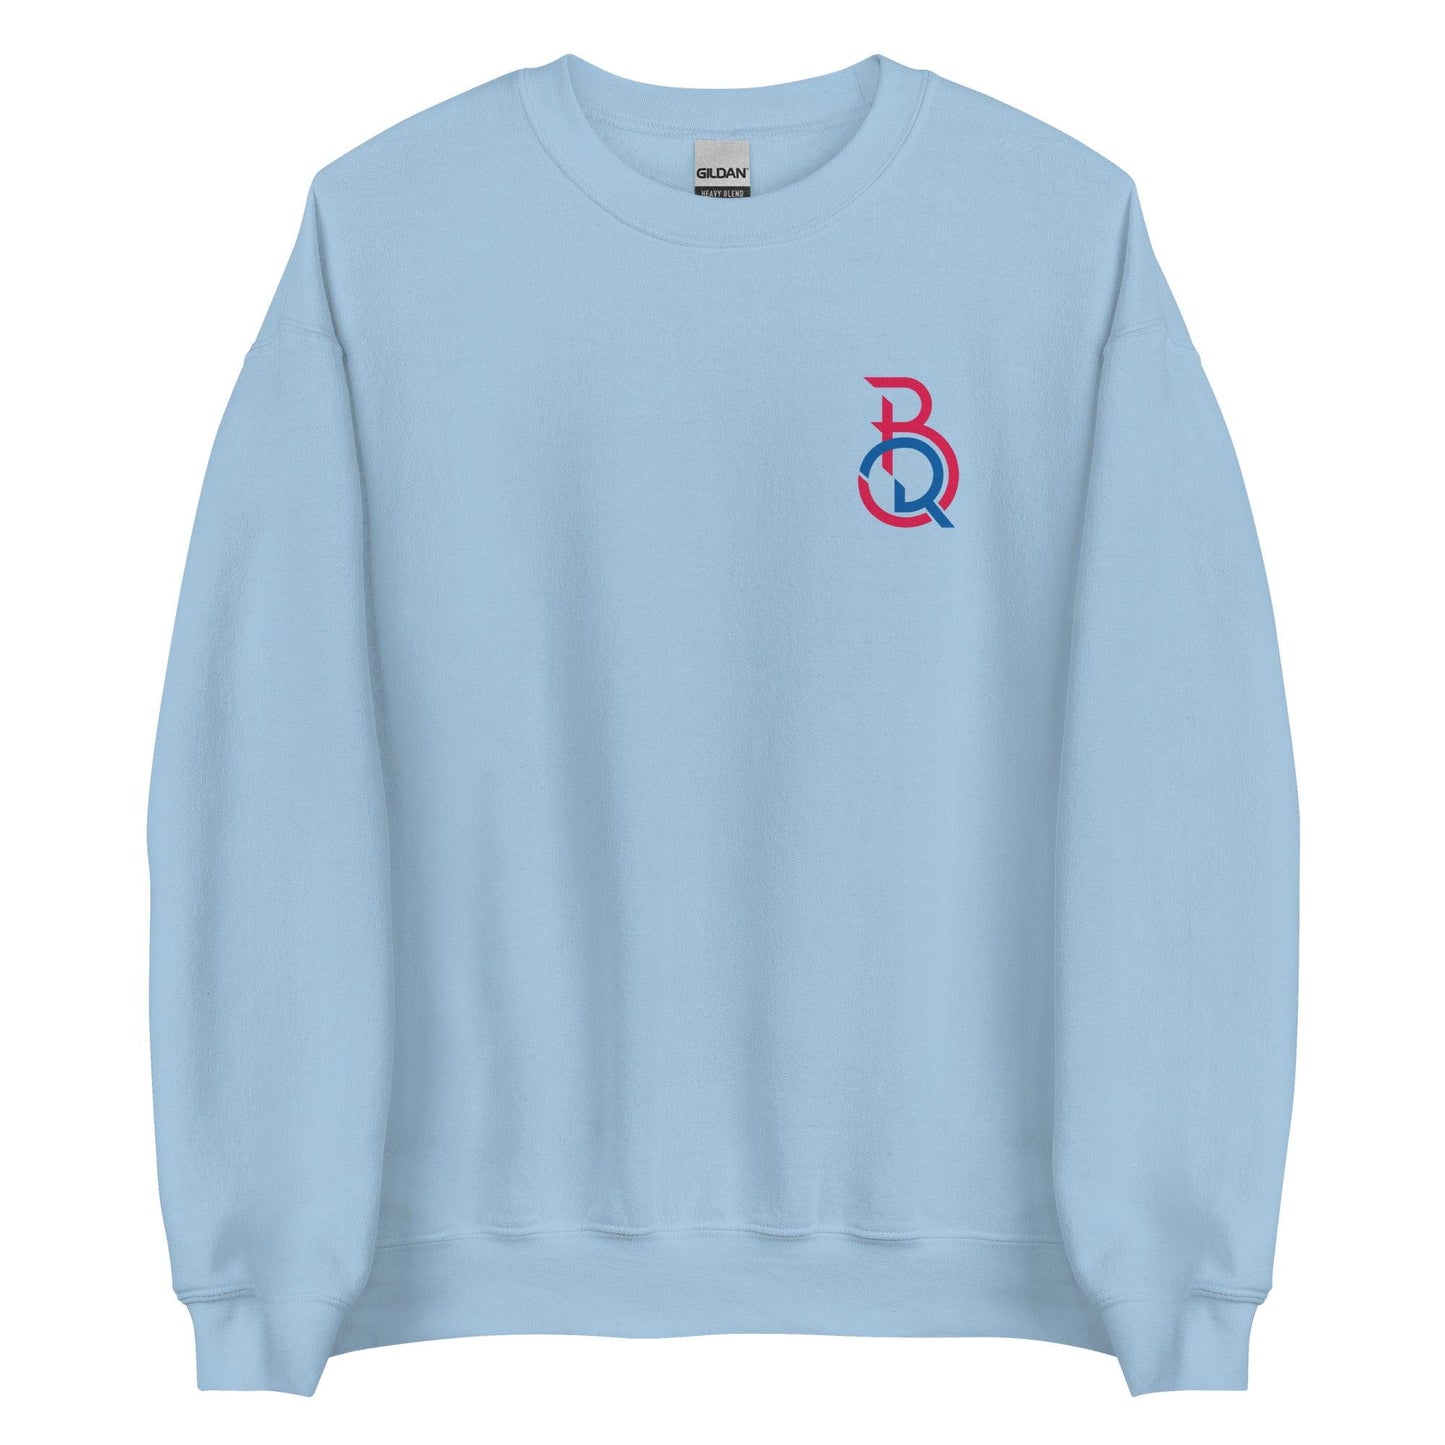 Baron Radcliff “Signature” Sweatshirt - Fan Arch